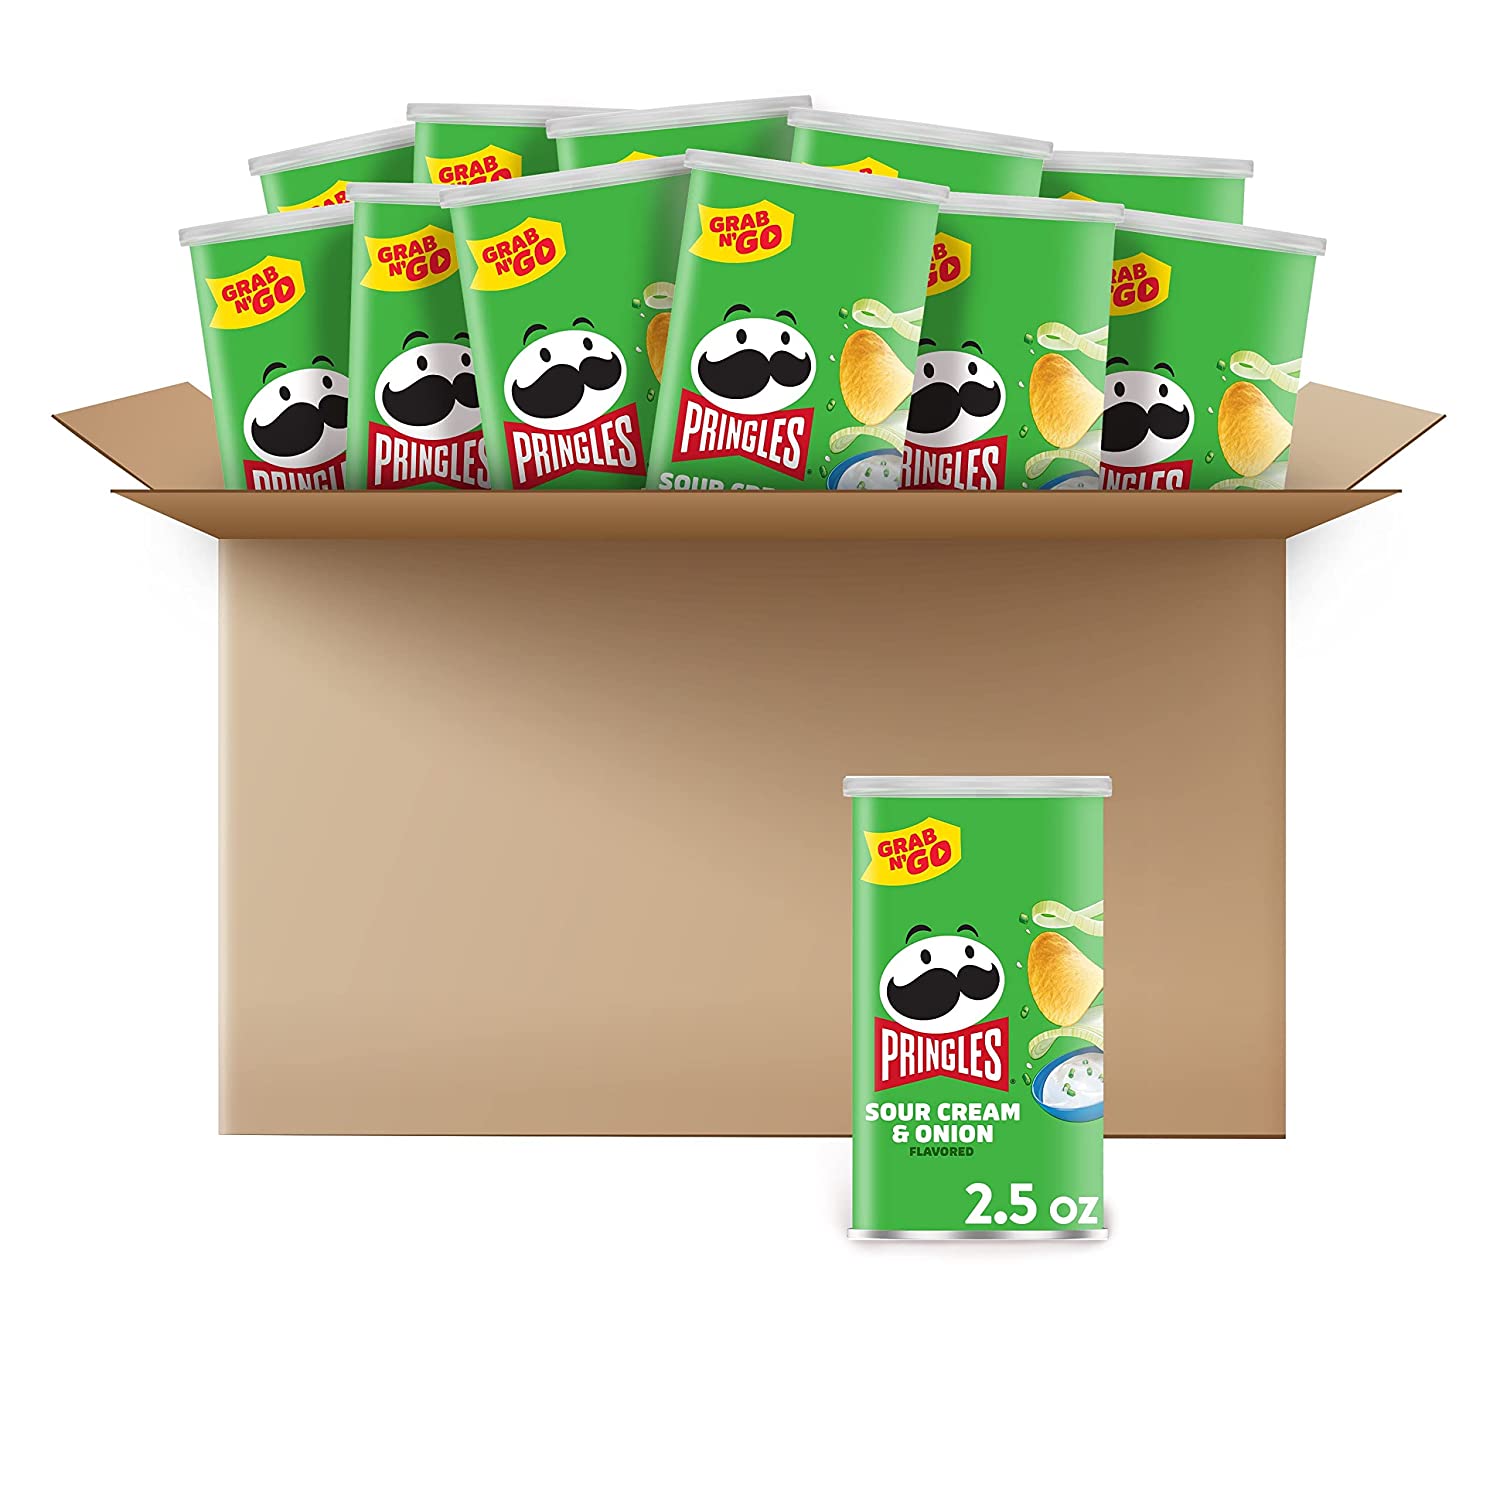 12-Count 2.5-Oz Pringles Potato Crisps Chips (Sour Cream & Onion) $9.50 w/ S&S + Free Shipping w/ Prime or Orders $25+